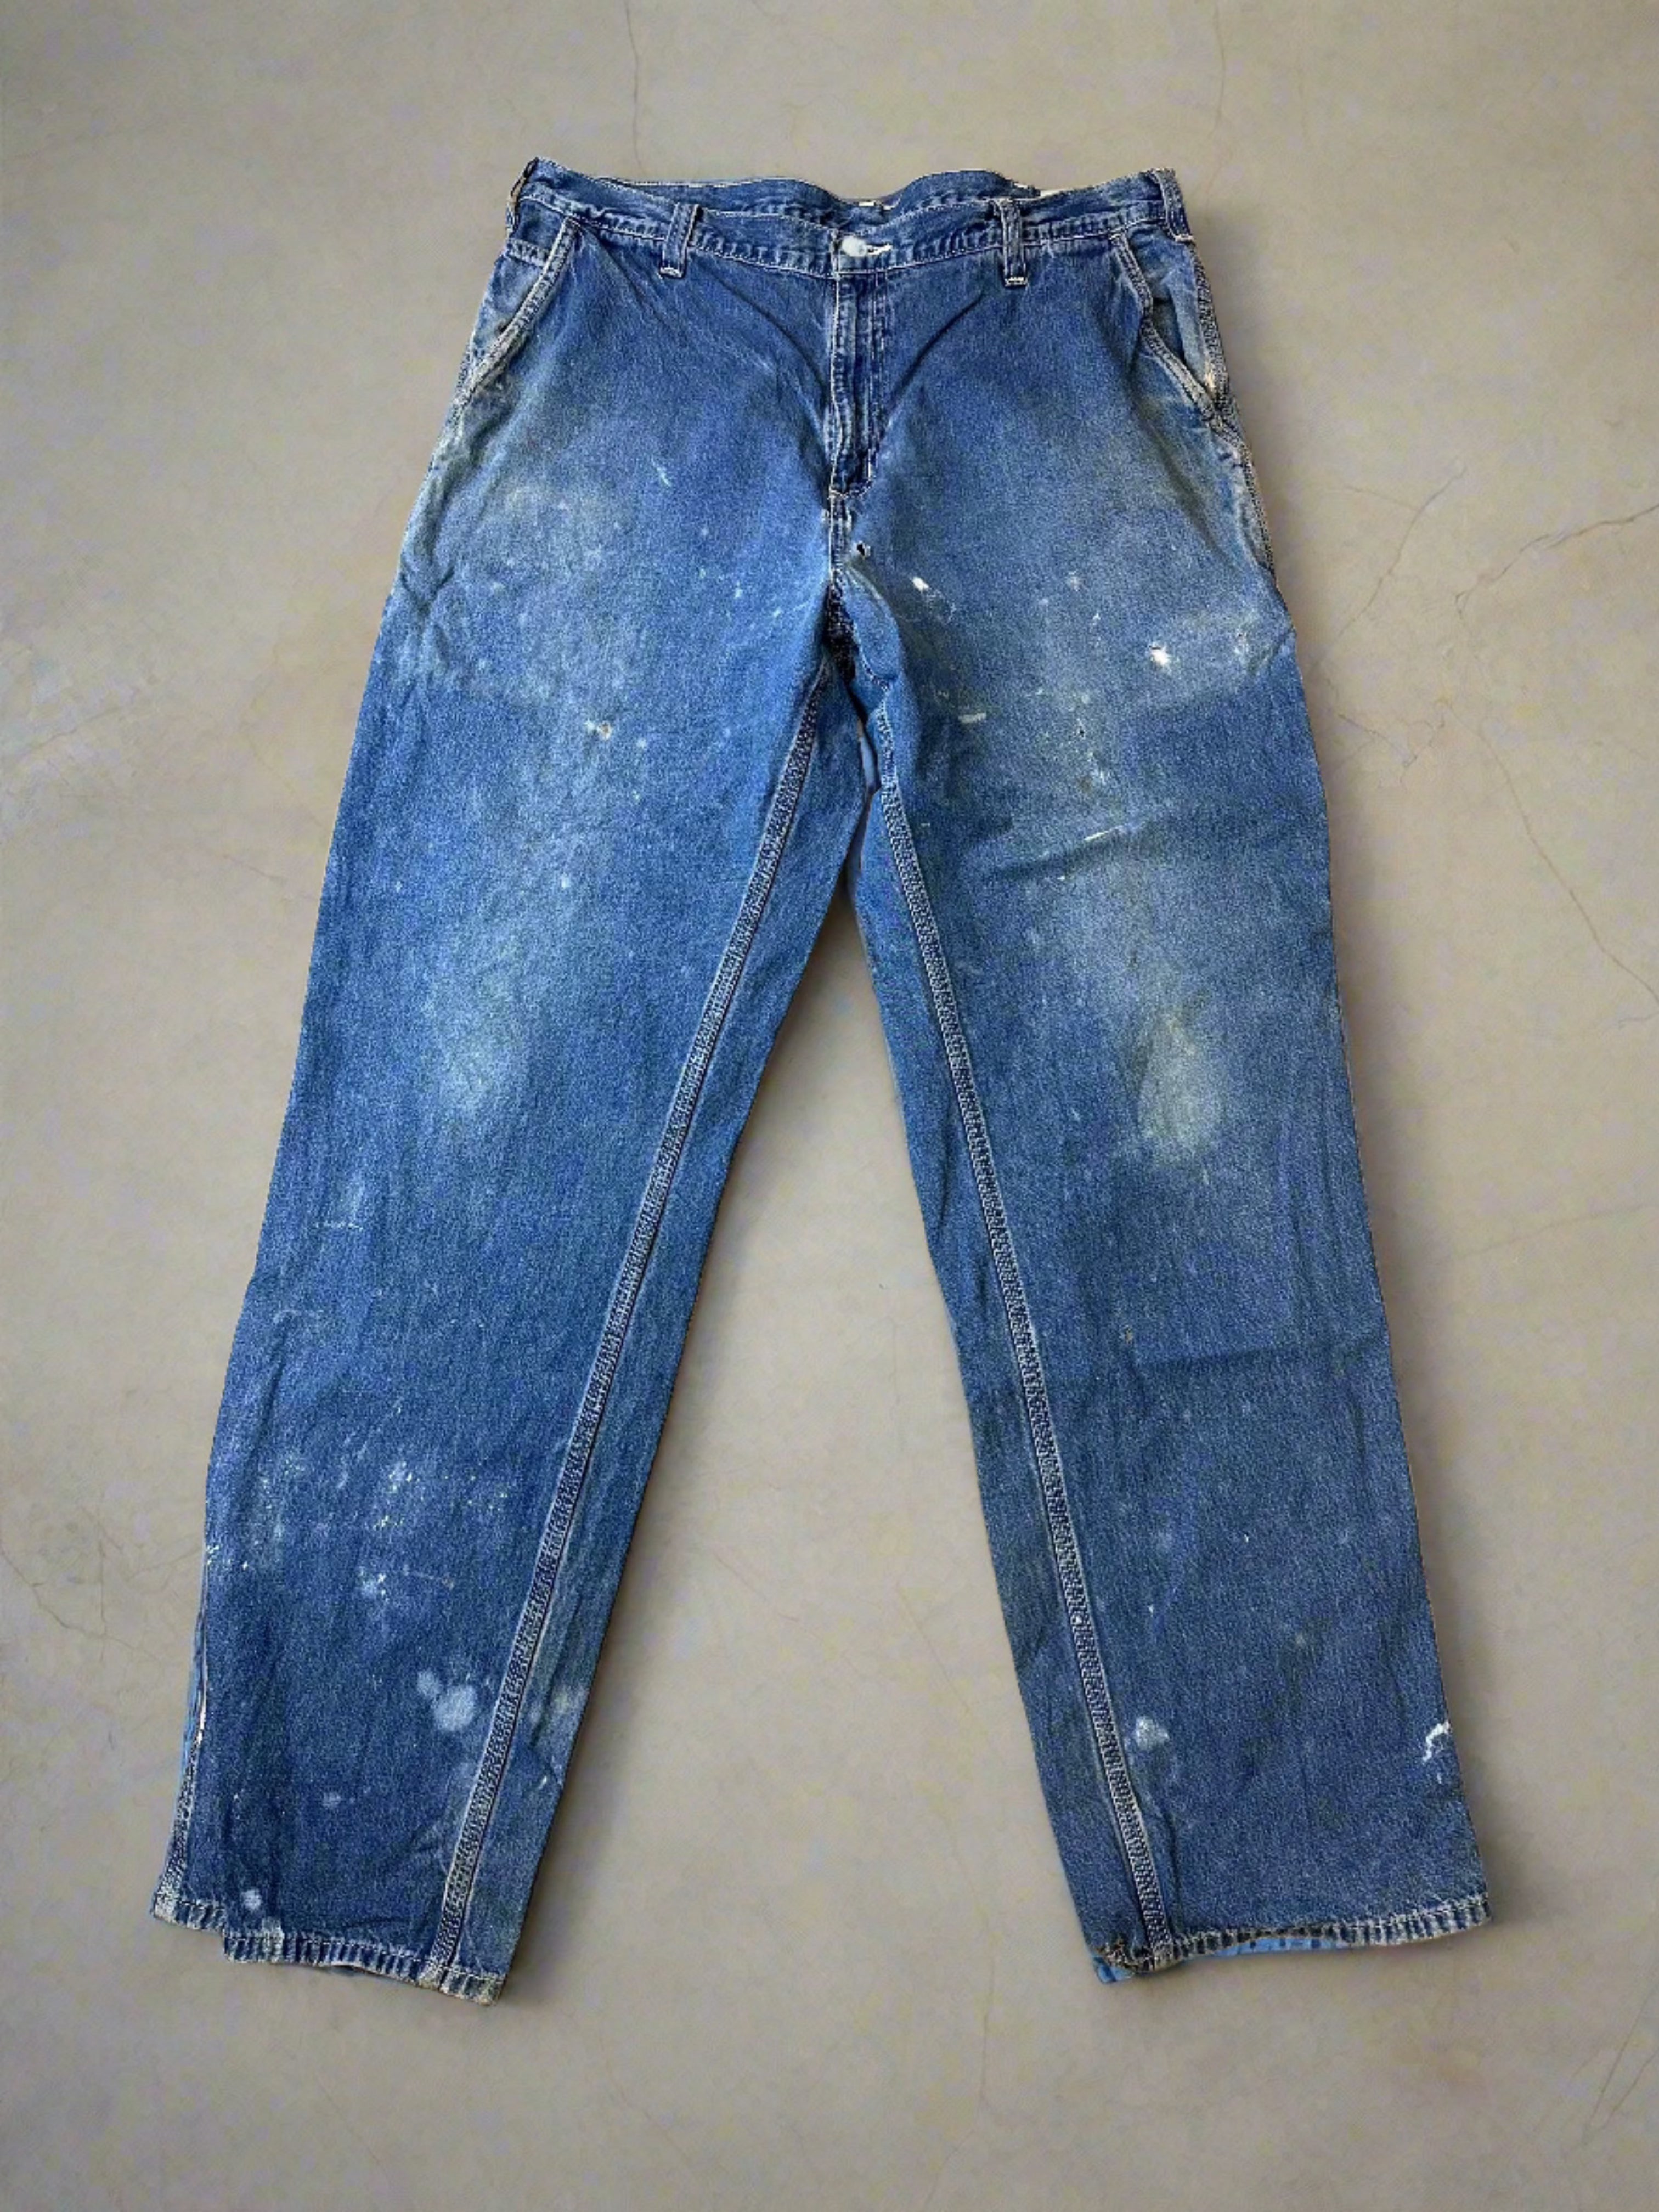 Vintage Carhartt Distressed Pants - size 38x34